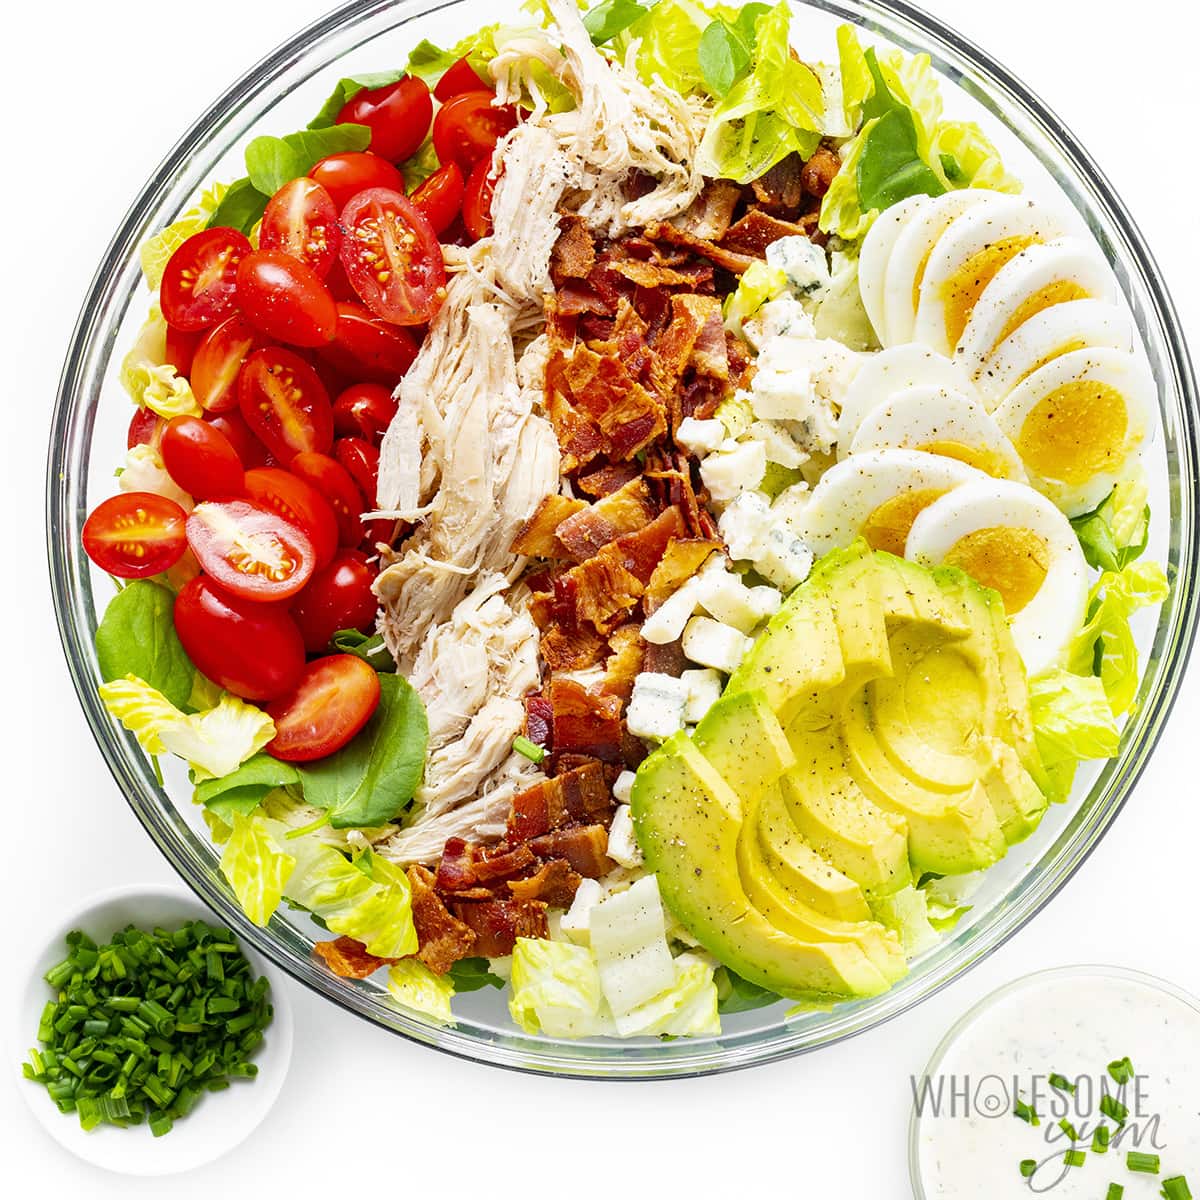 https://www.wholesomeyum.com/wp-content/uploads/2020/07/wholesomeyum-Cobb-Salad-Recipe-6.jpg